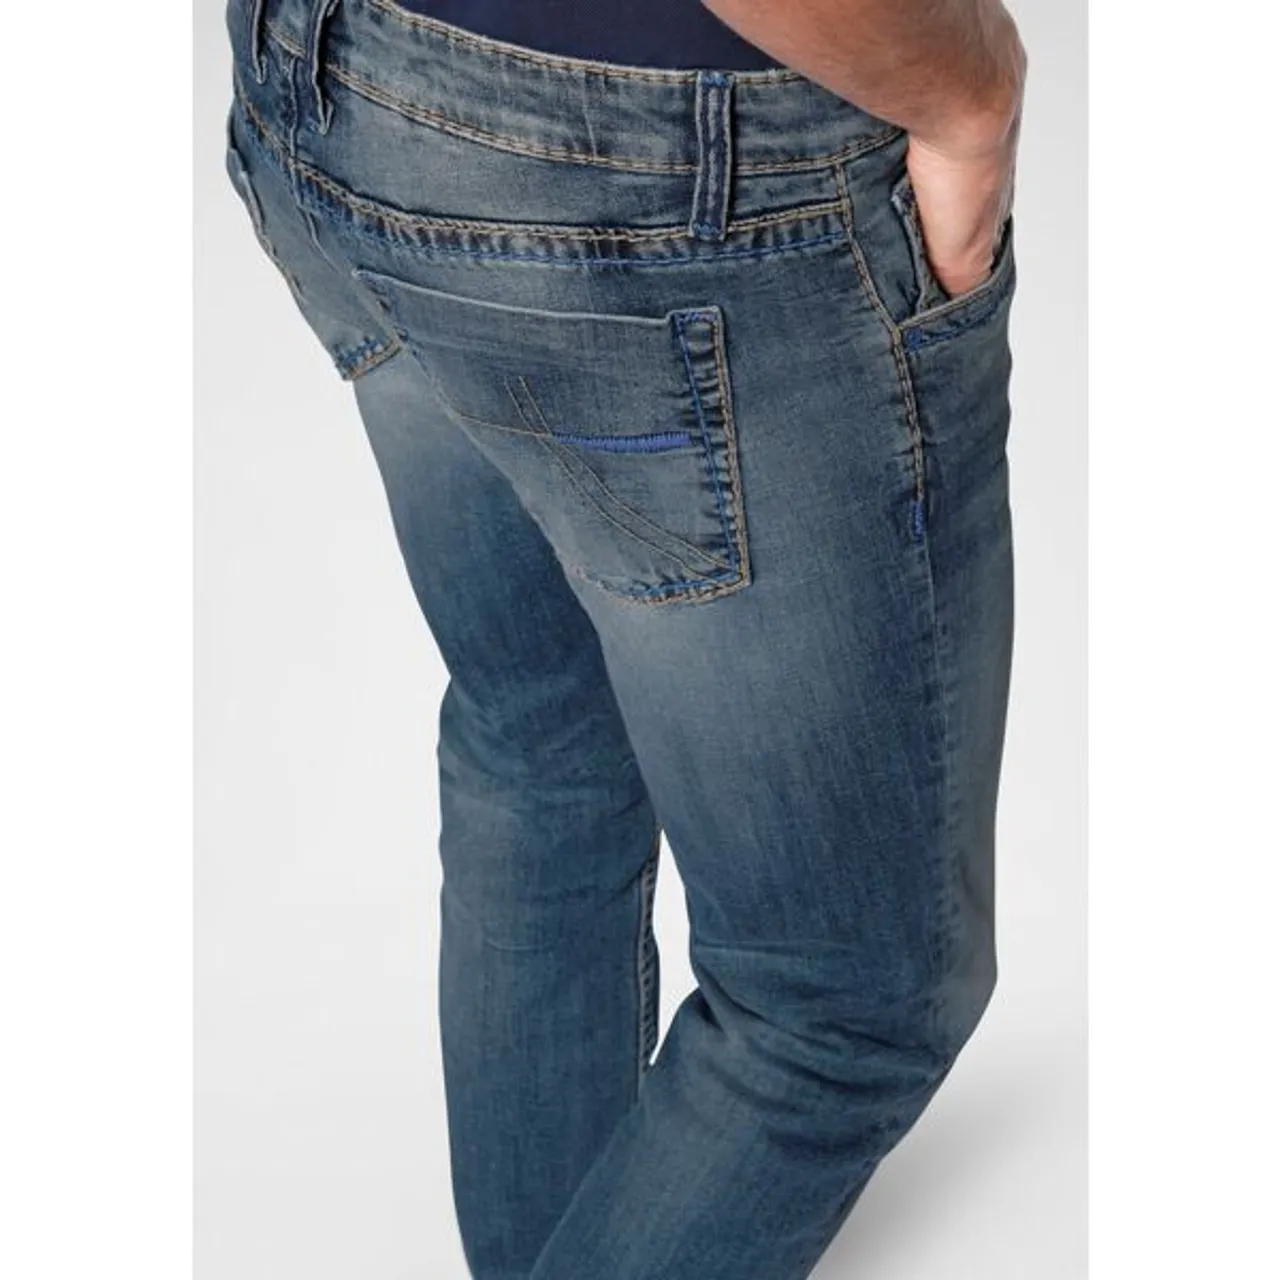 Straight-Jeans CAMP DAVID "NI:CO:R611" Gr. 31, Länge 34, blau (dark, used, vintage) Herren Jeans Straight Fit